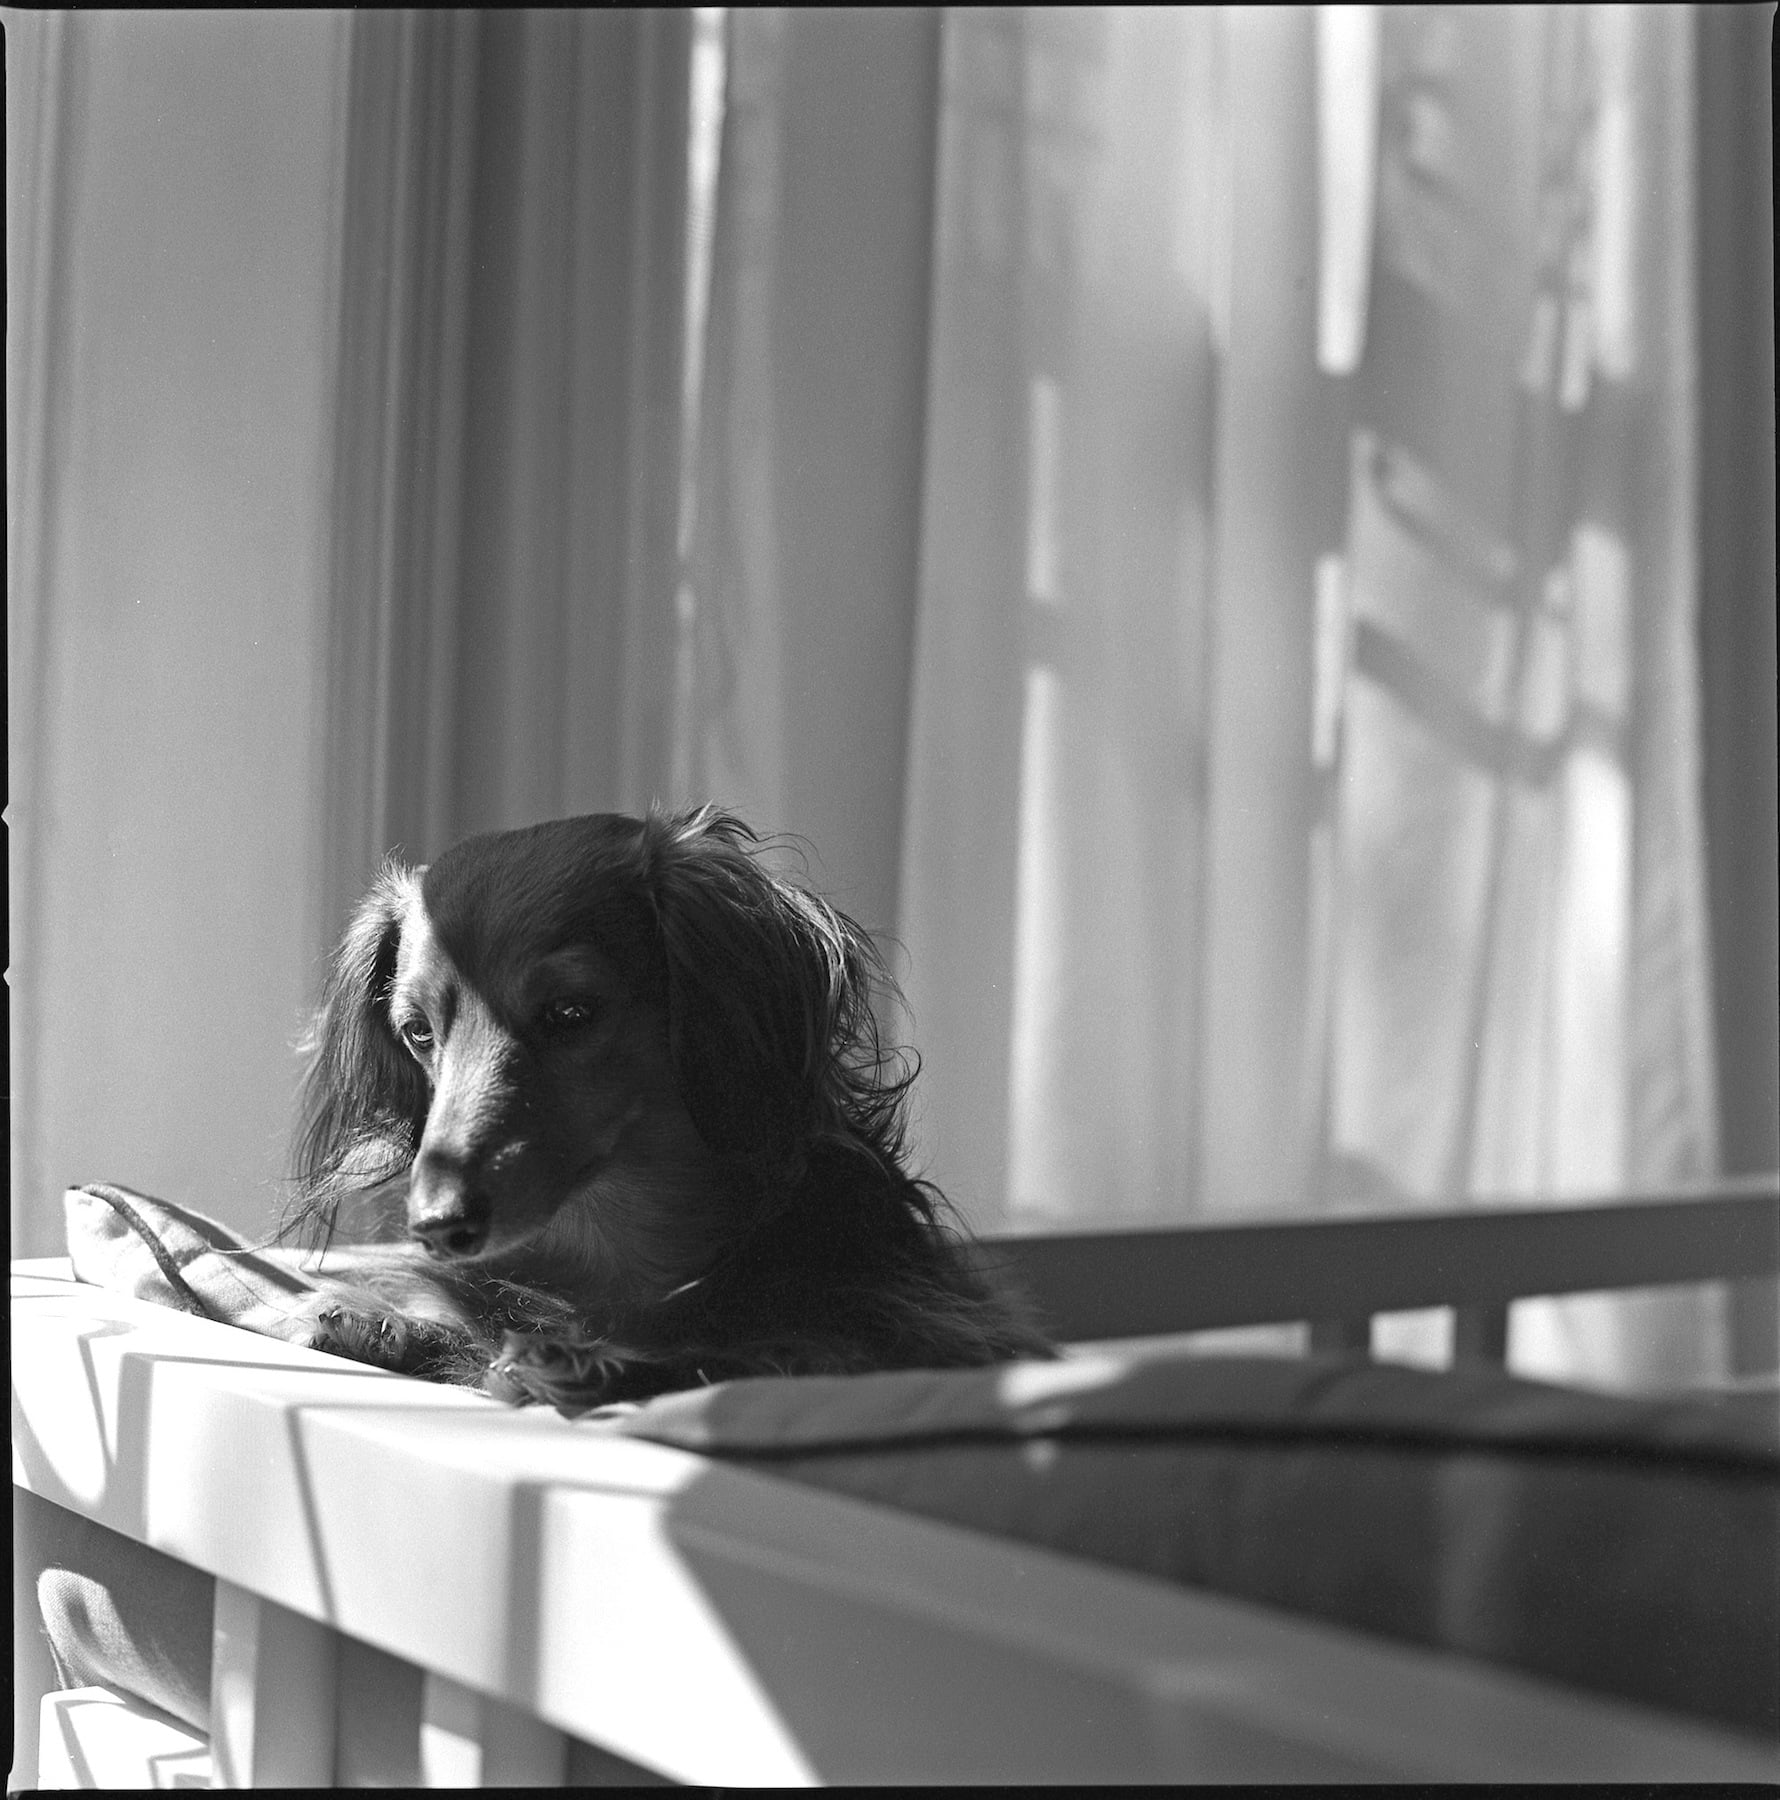 Chloe Contemplating | Hasselblad 501cm | Zeiss 80mm f2.8 | Kodak Tri-X 400 | Shawn Hoke